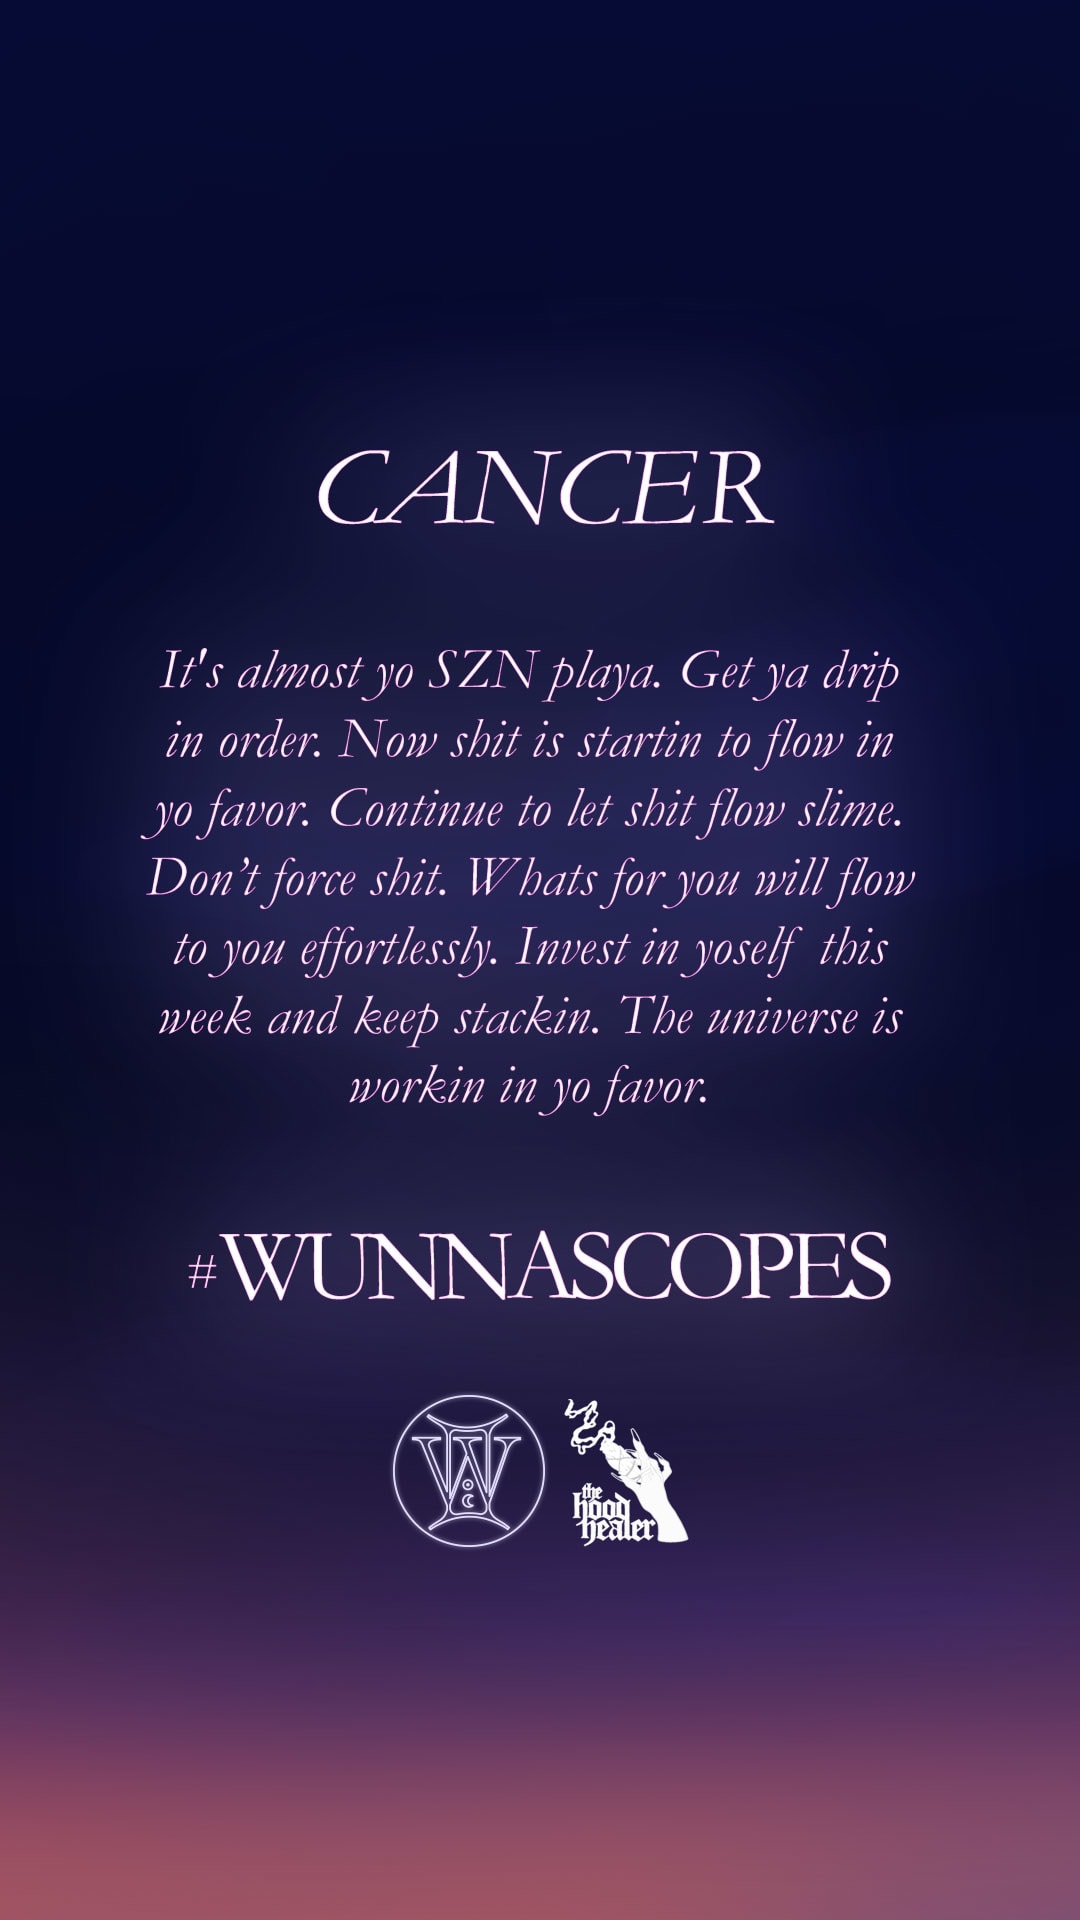 Wunnascope Cancer